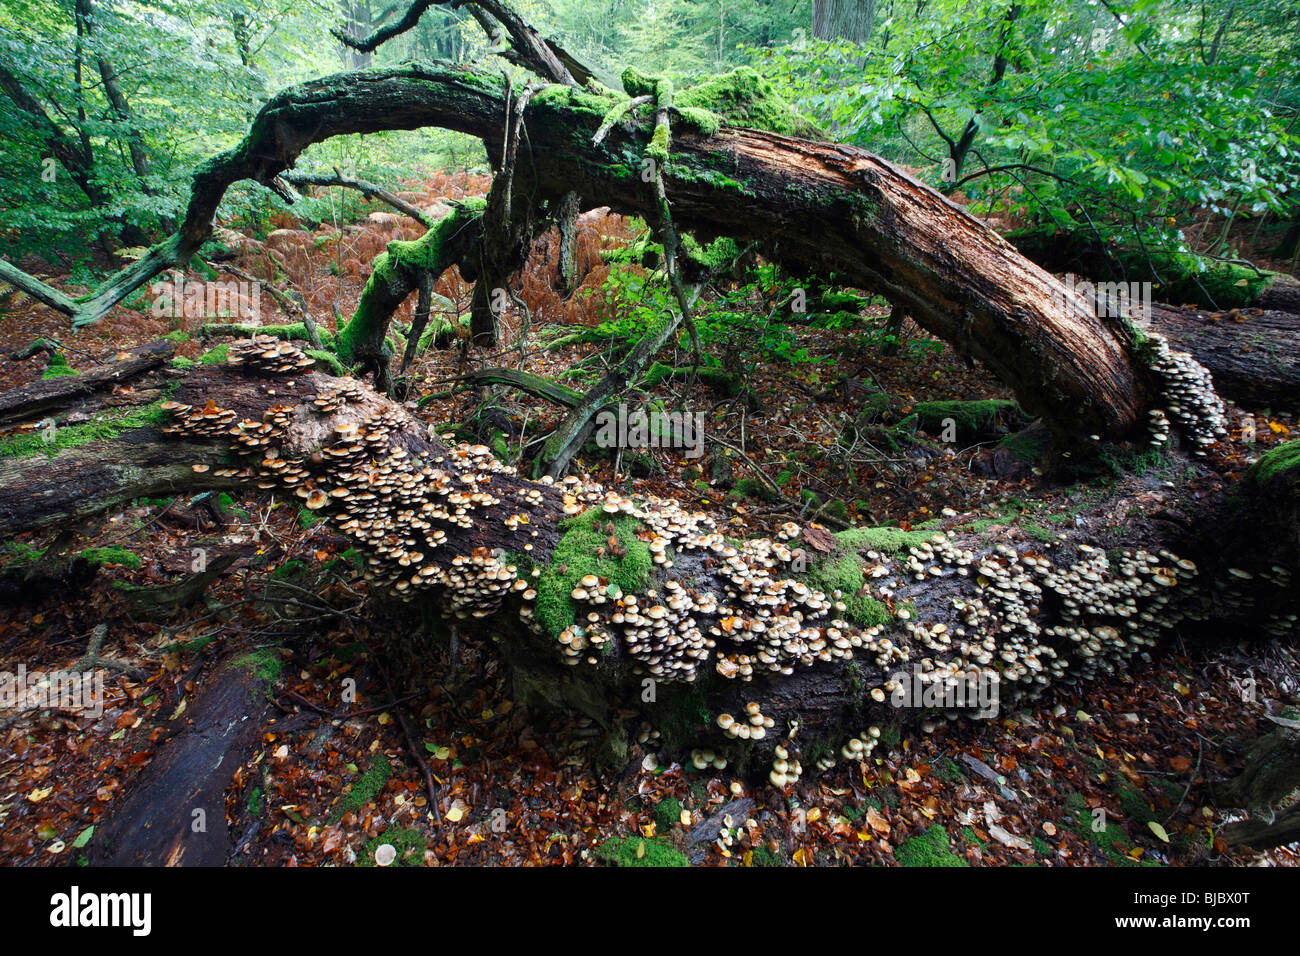 Sulphur Tuft (Hypholoma fascicular) - fungus growing on dead oak tree stem, autumn Stock Photo